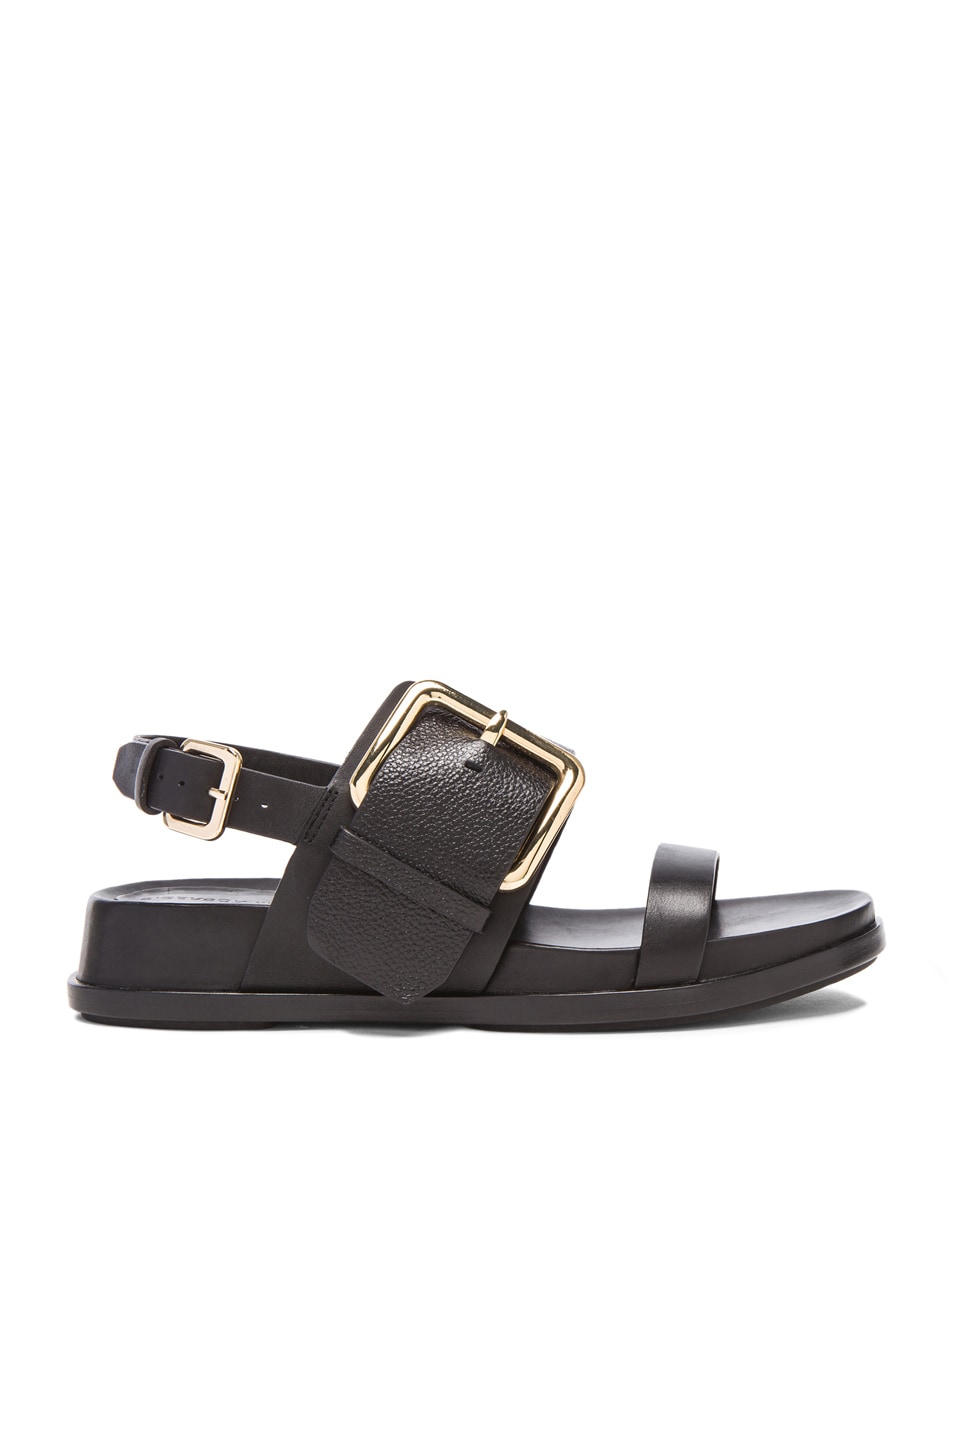 Sigerson Morrison Solar Leather Buckle Sandals in Black | FWRD